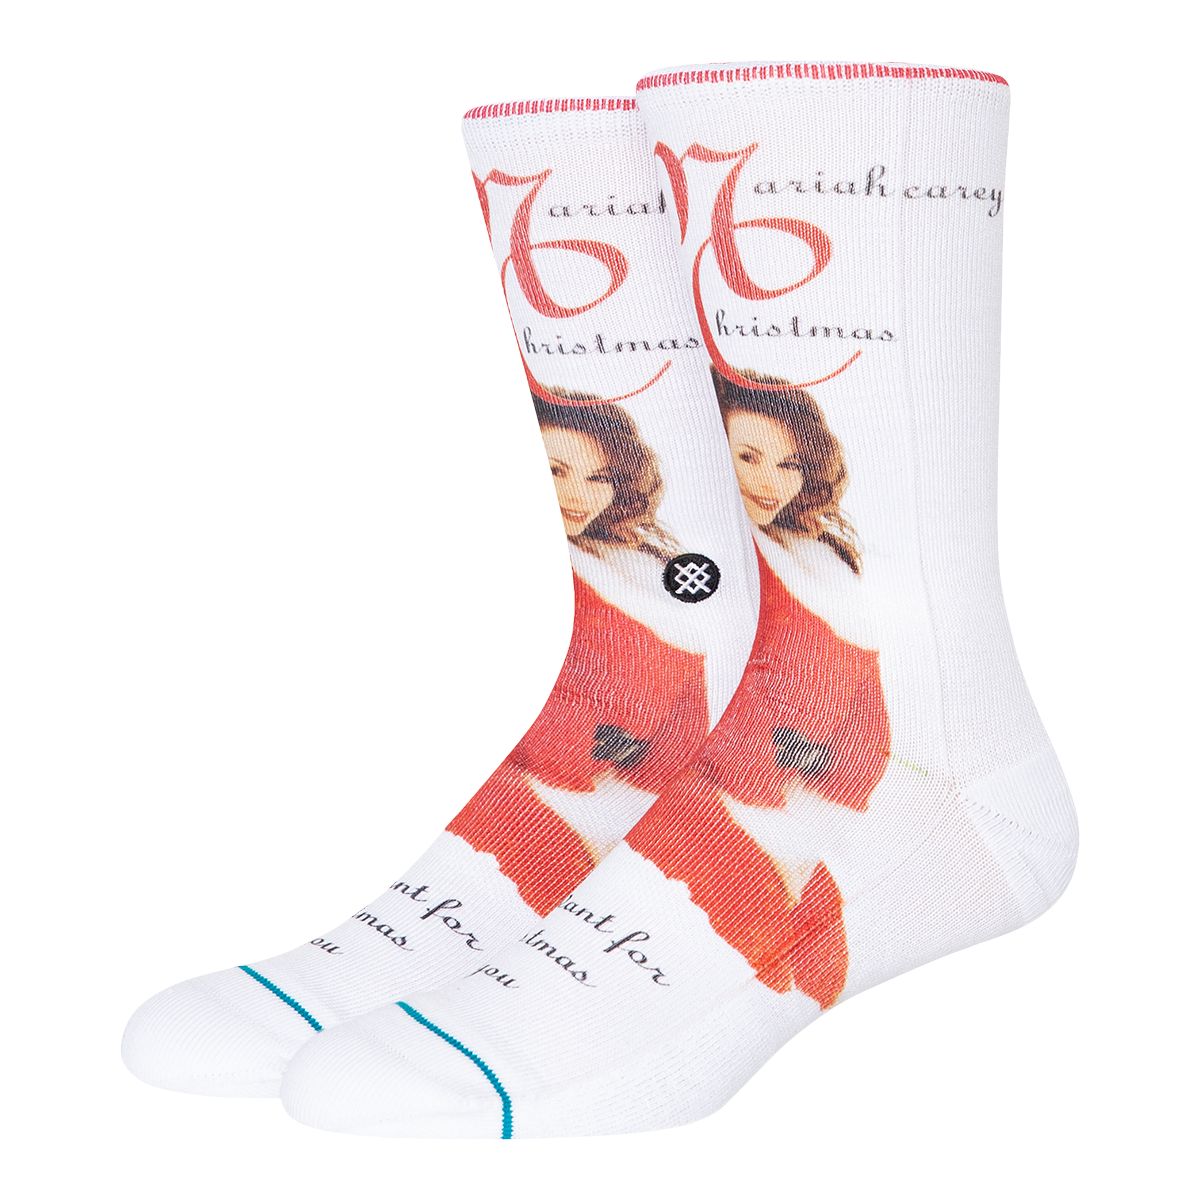 Image of Stance Women's Holiday Mariah Carey Crew Socks